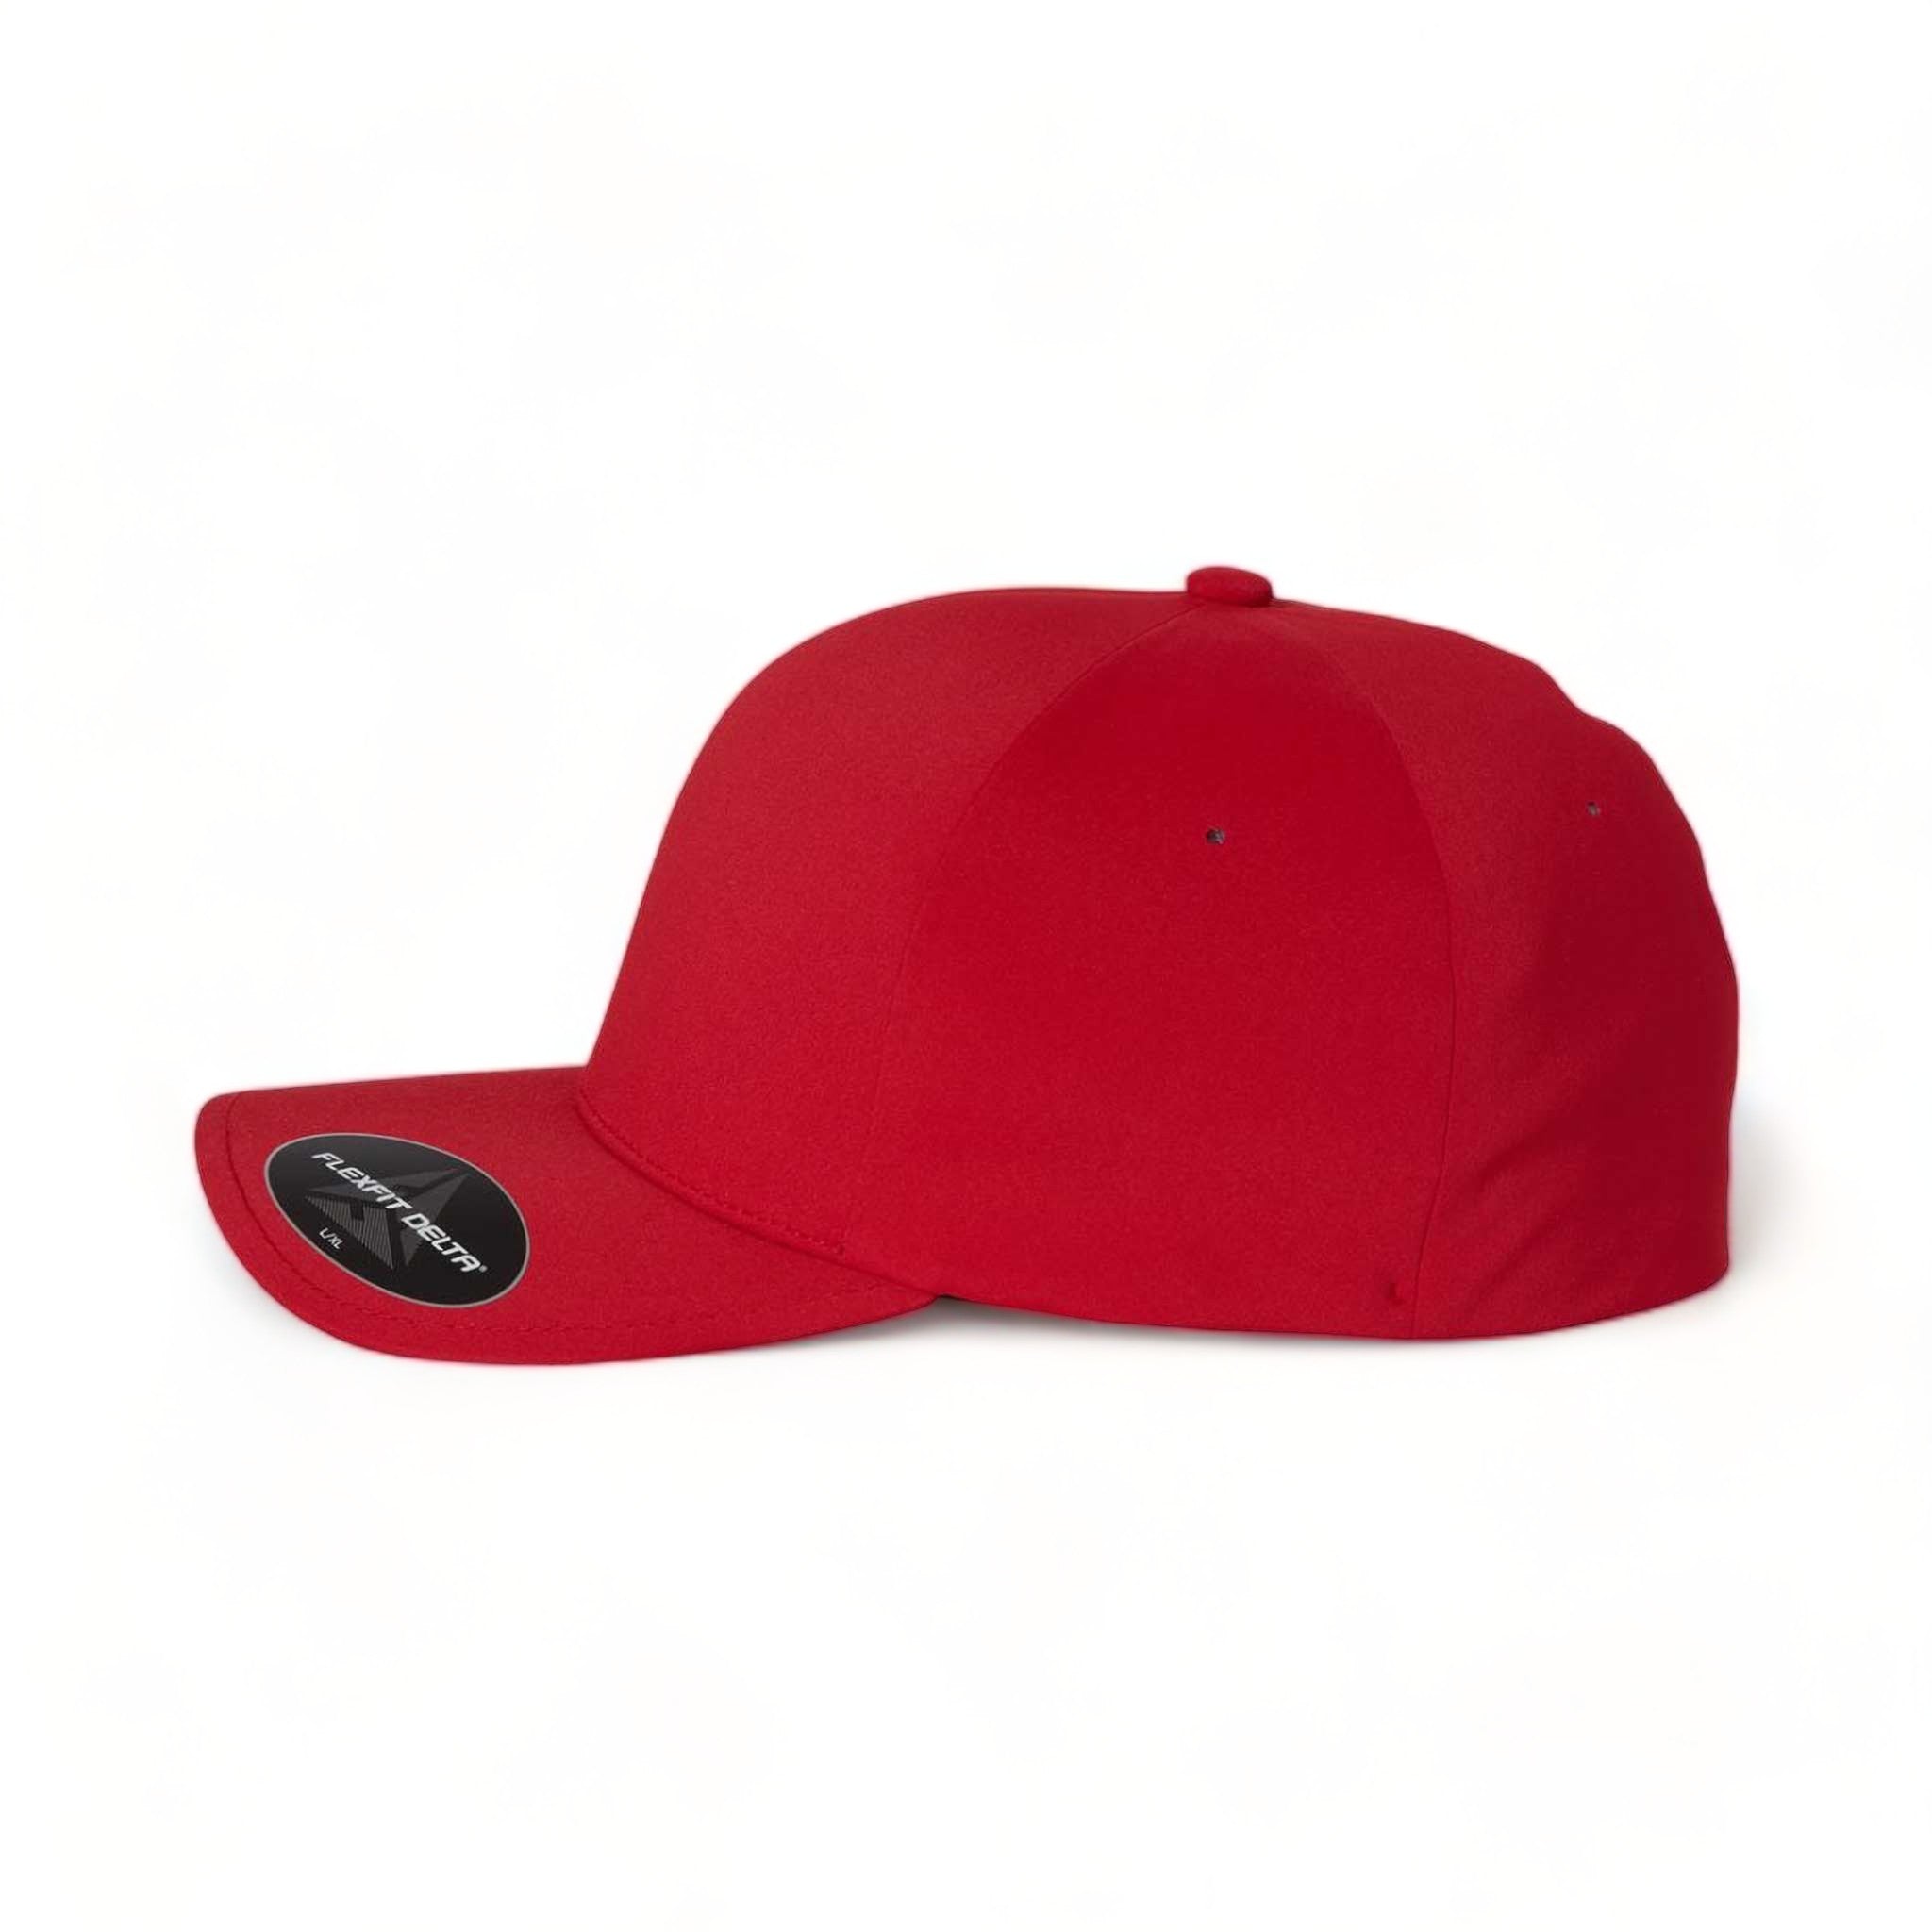 Side view of Flexfit 180 custom hat in red